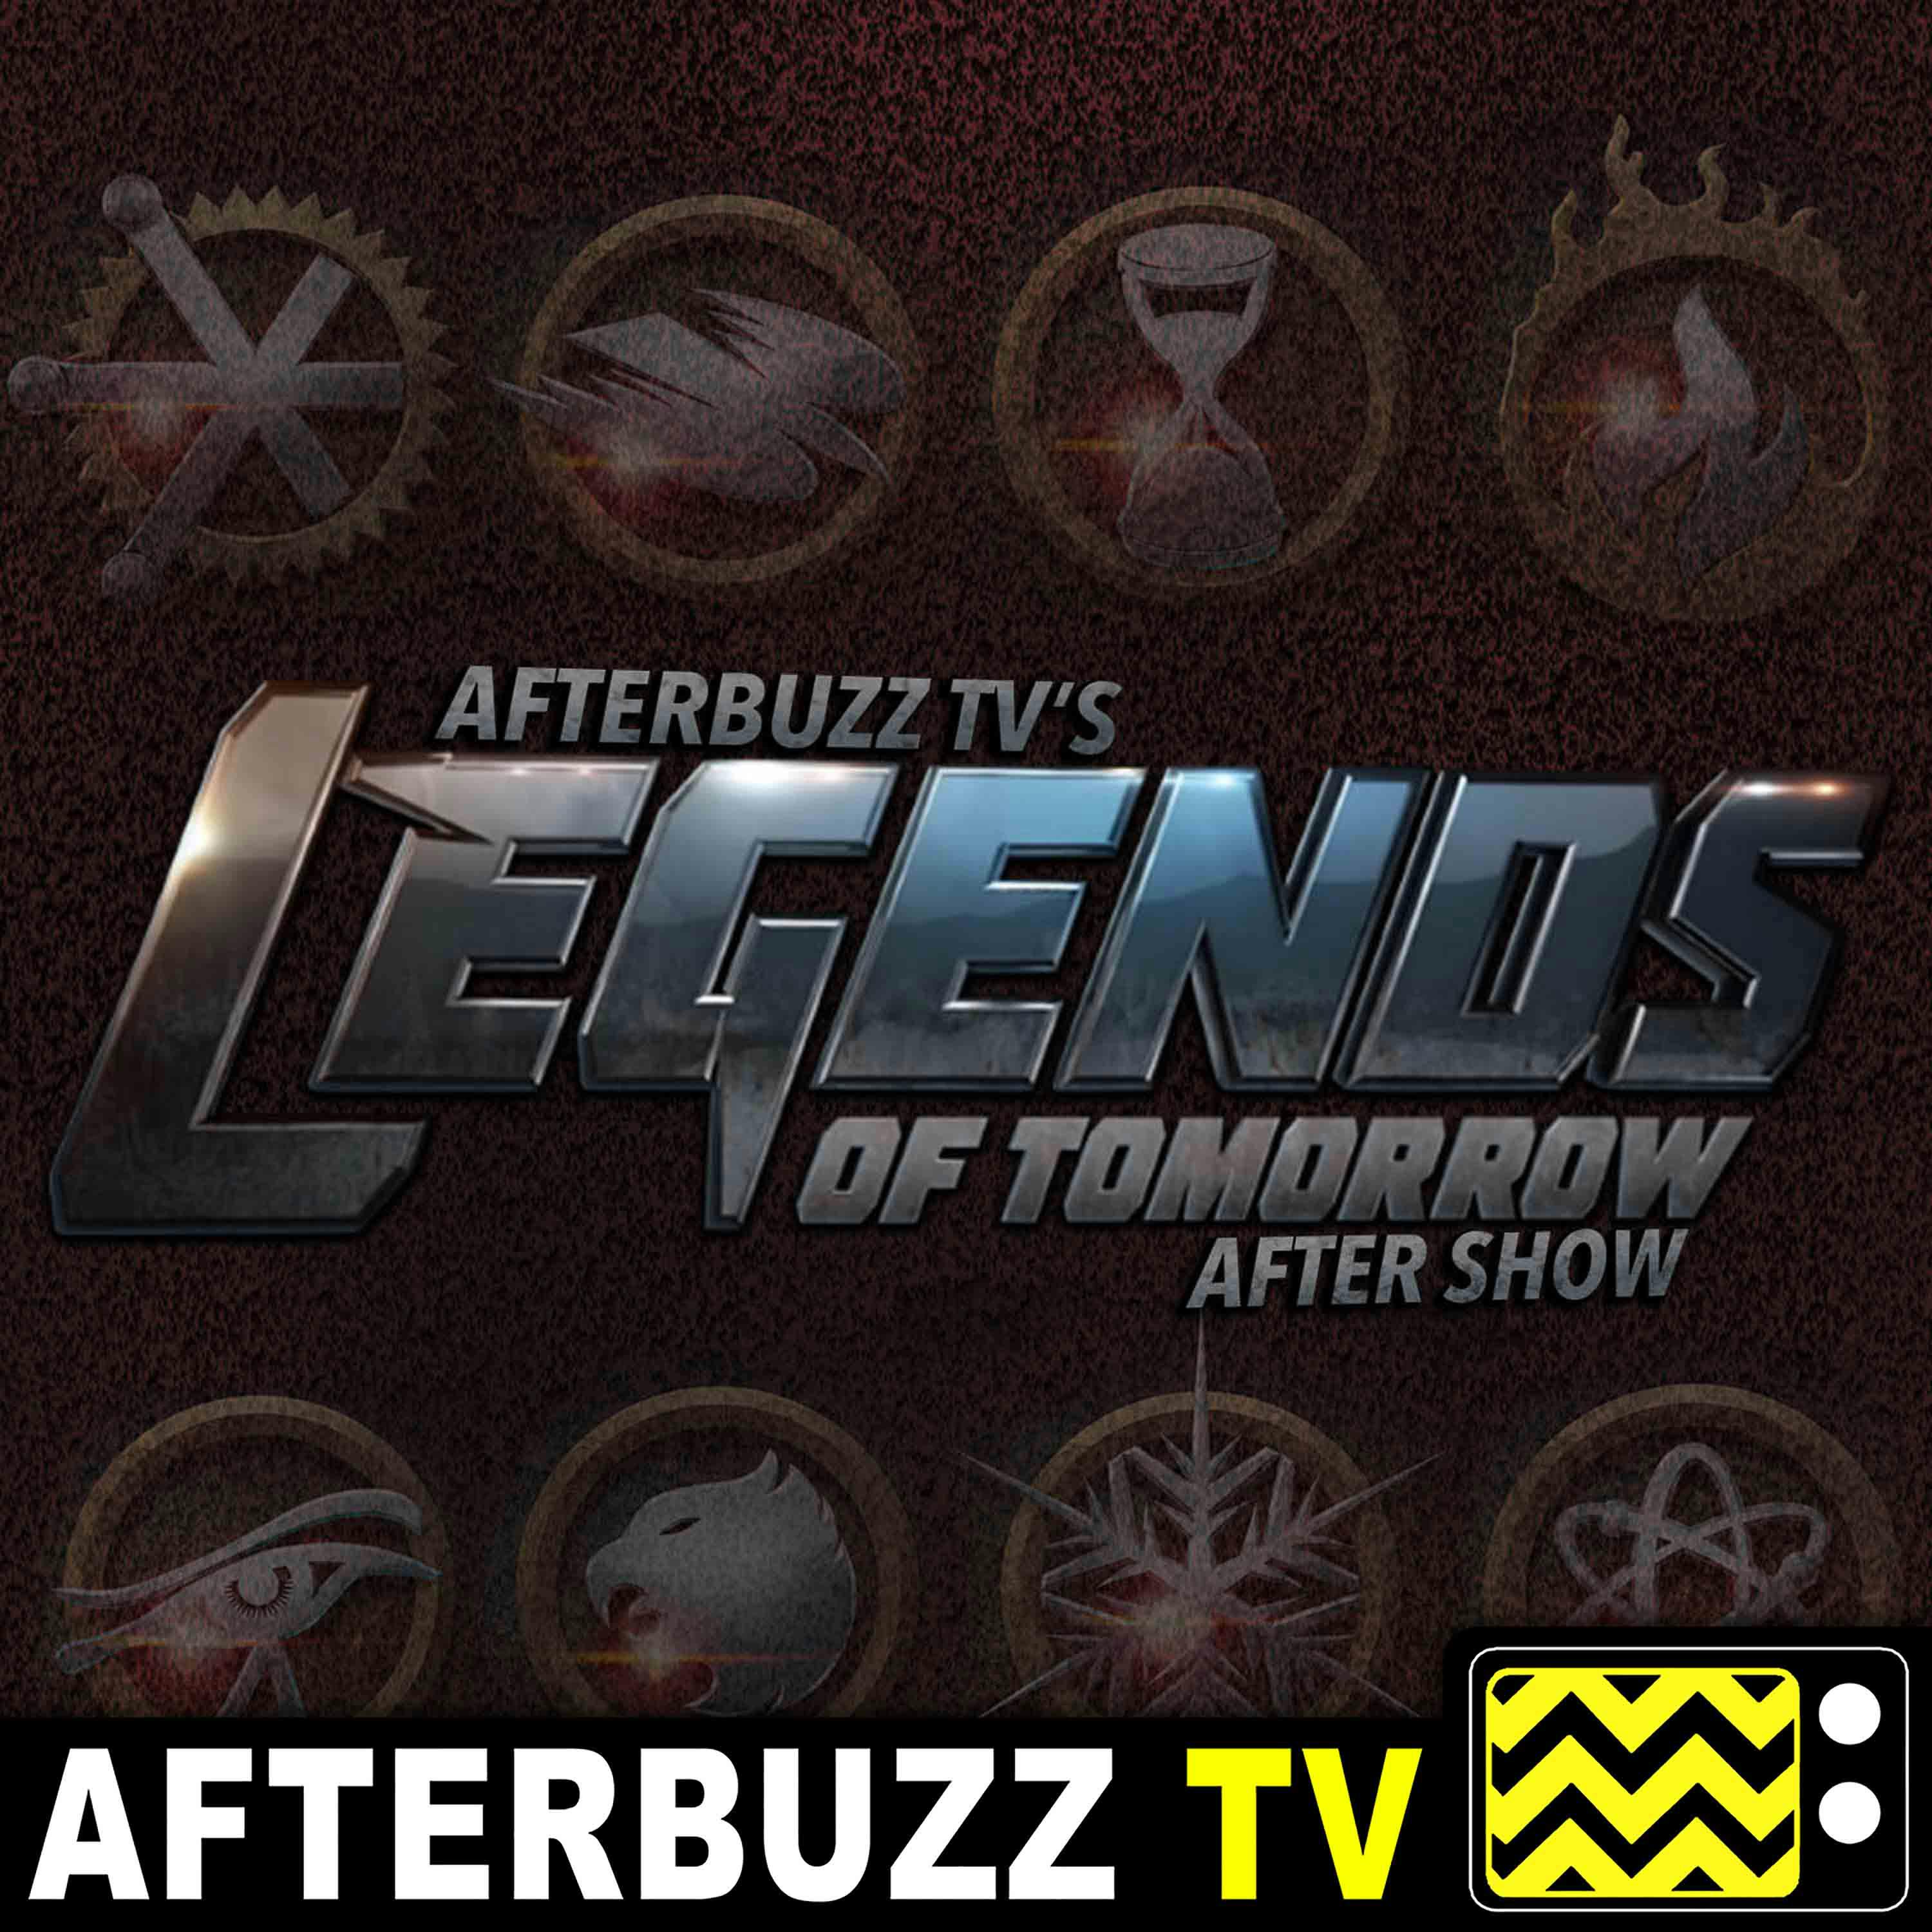 “Meet The legends” Season 5 Episode 2 'Legends Of Tomorrow' Recap & Review